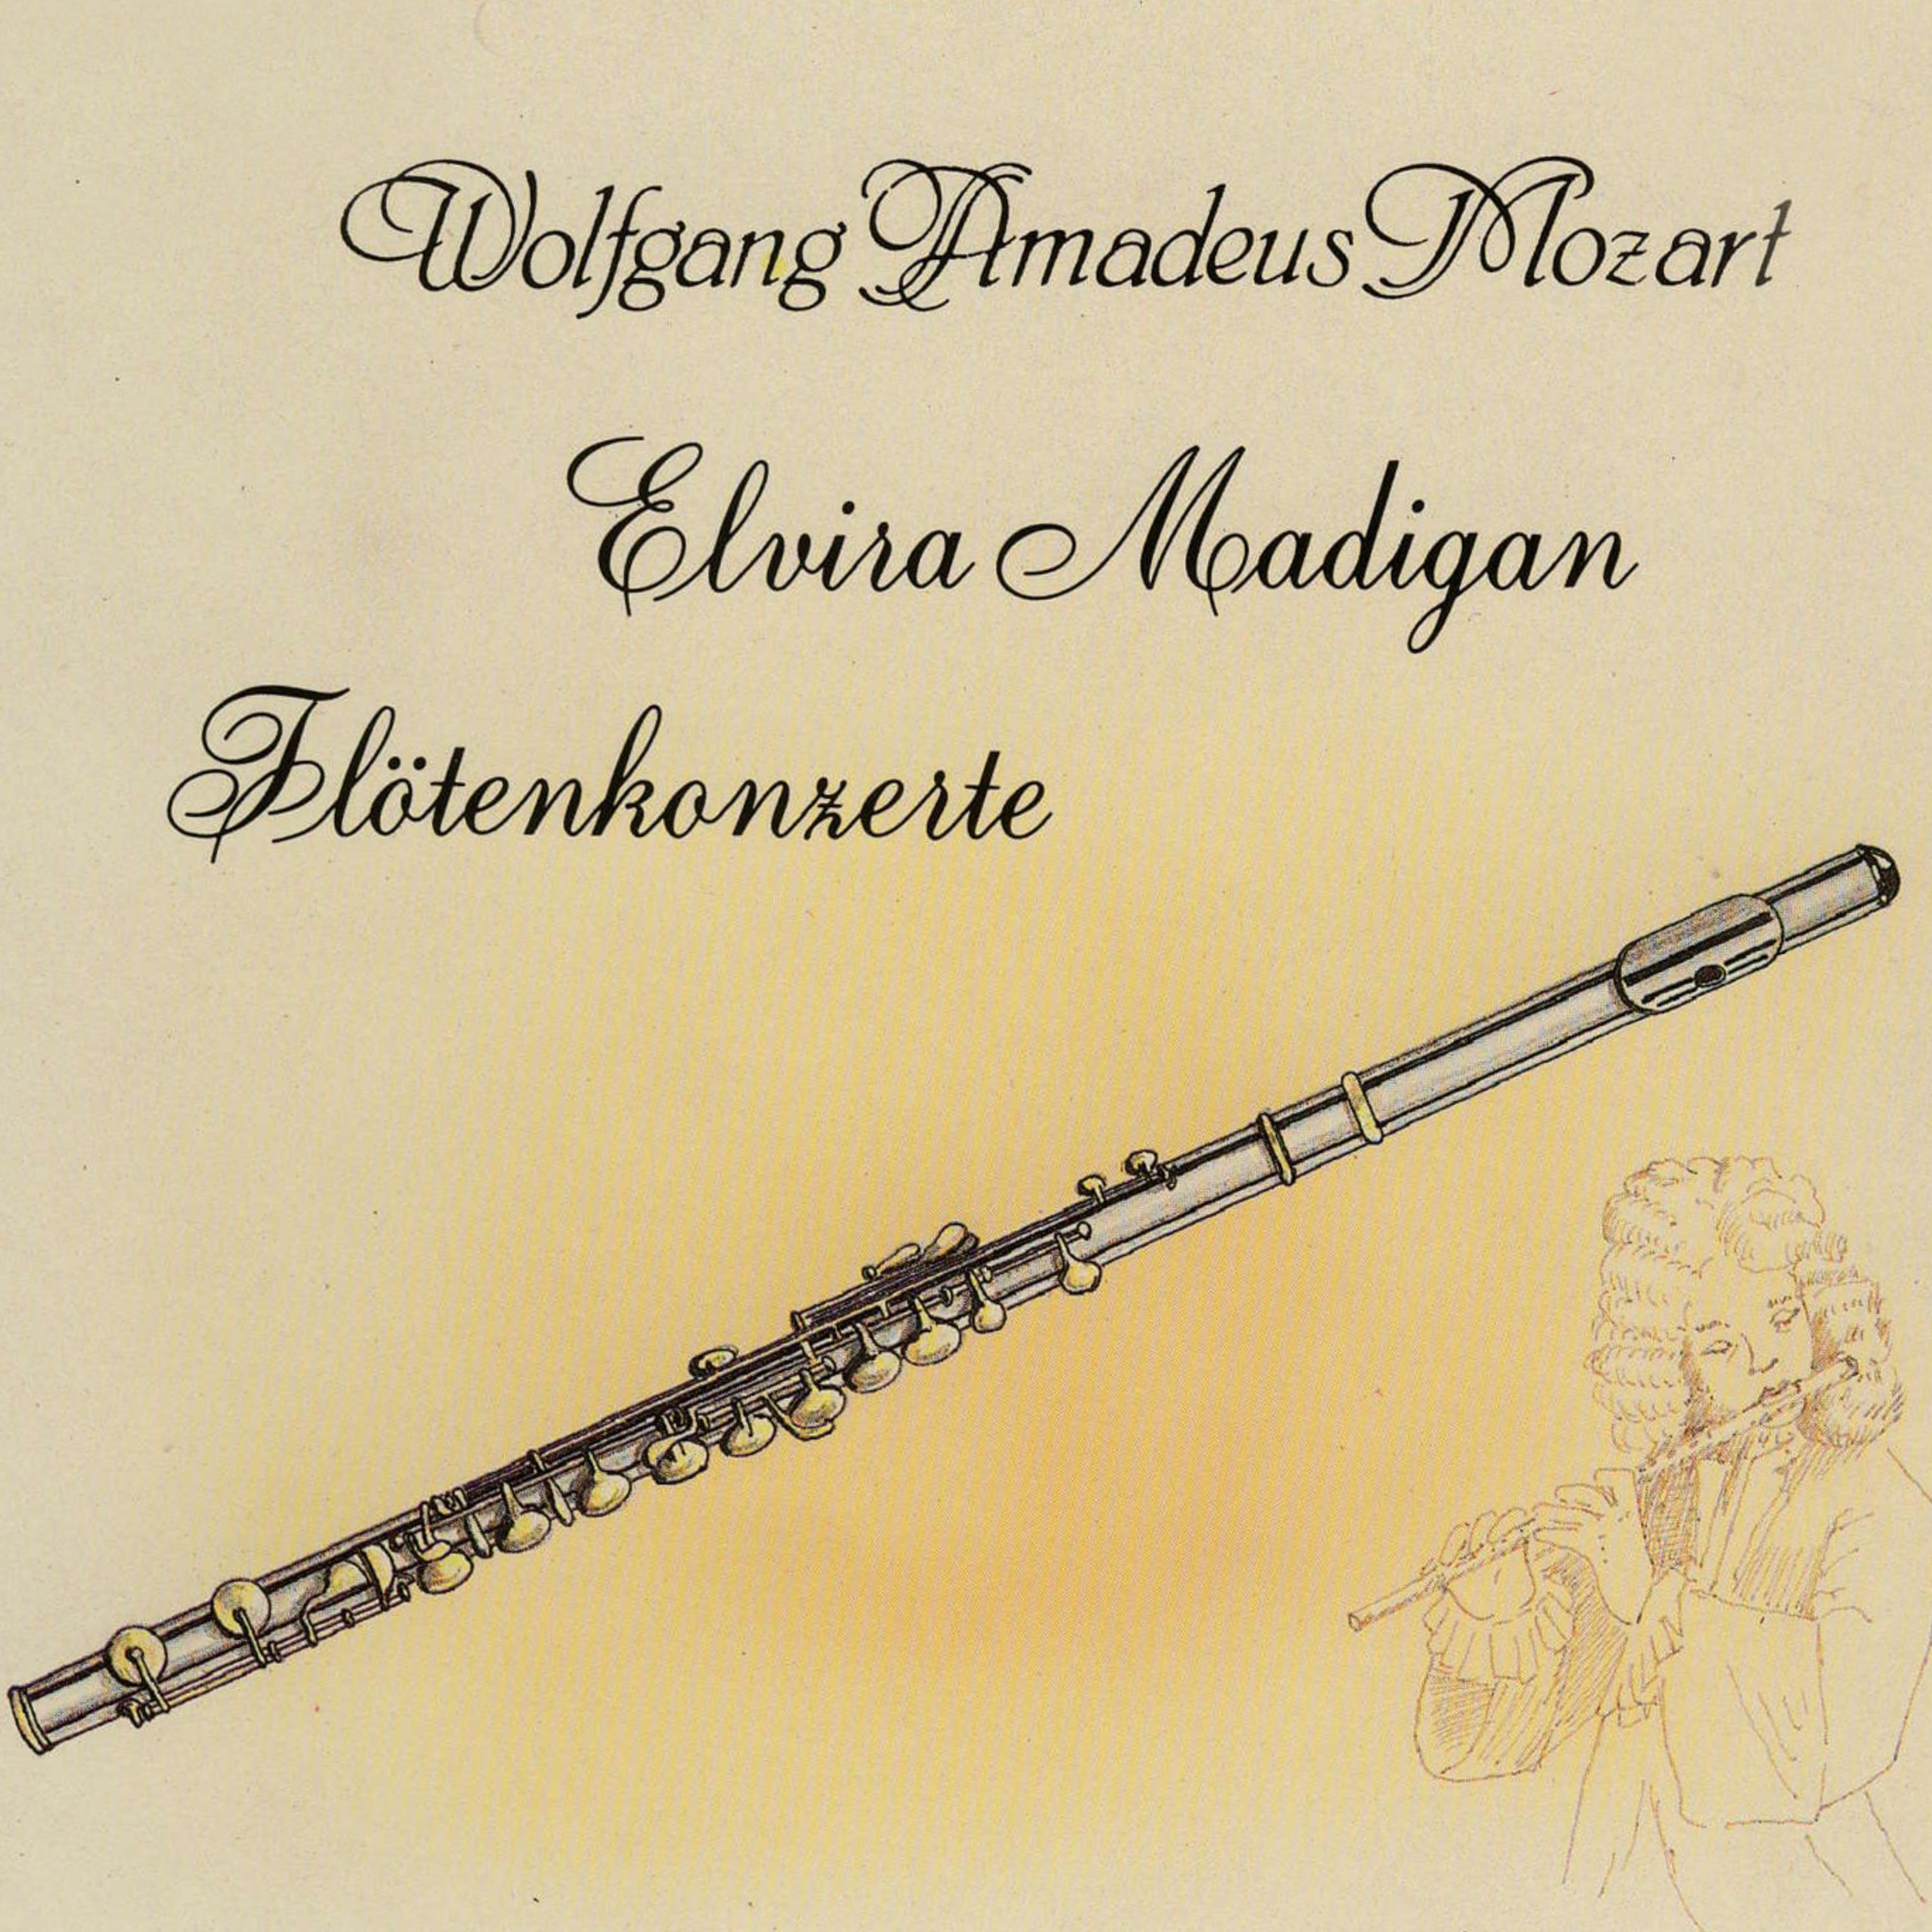 Wolfgang Amadeus Mozart: Elvira Madigan, Fl tenkonzerte